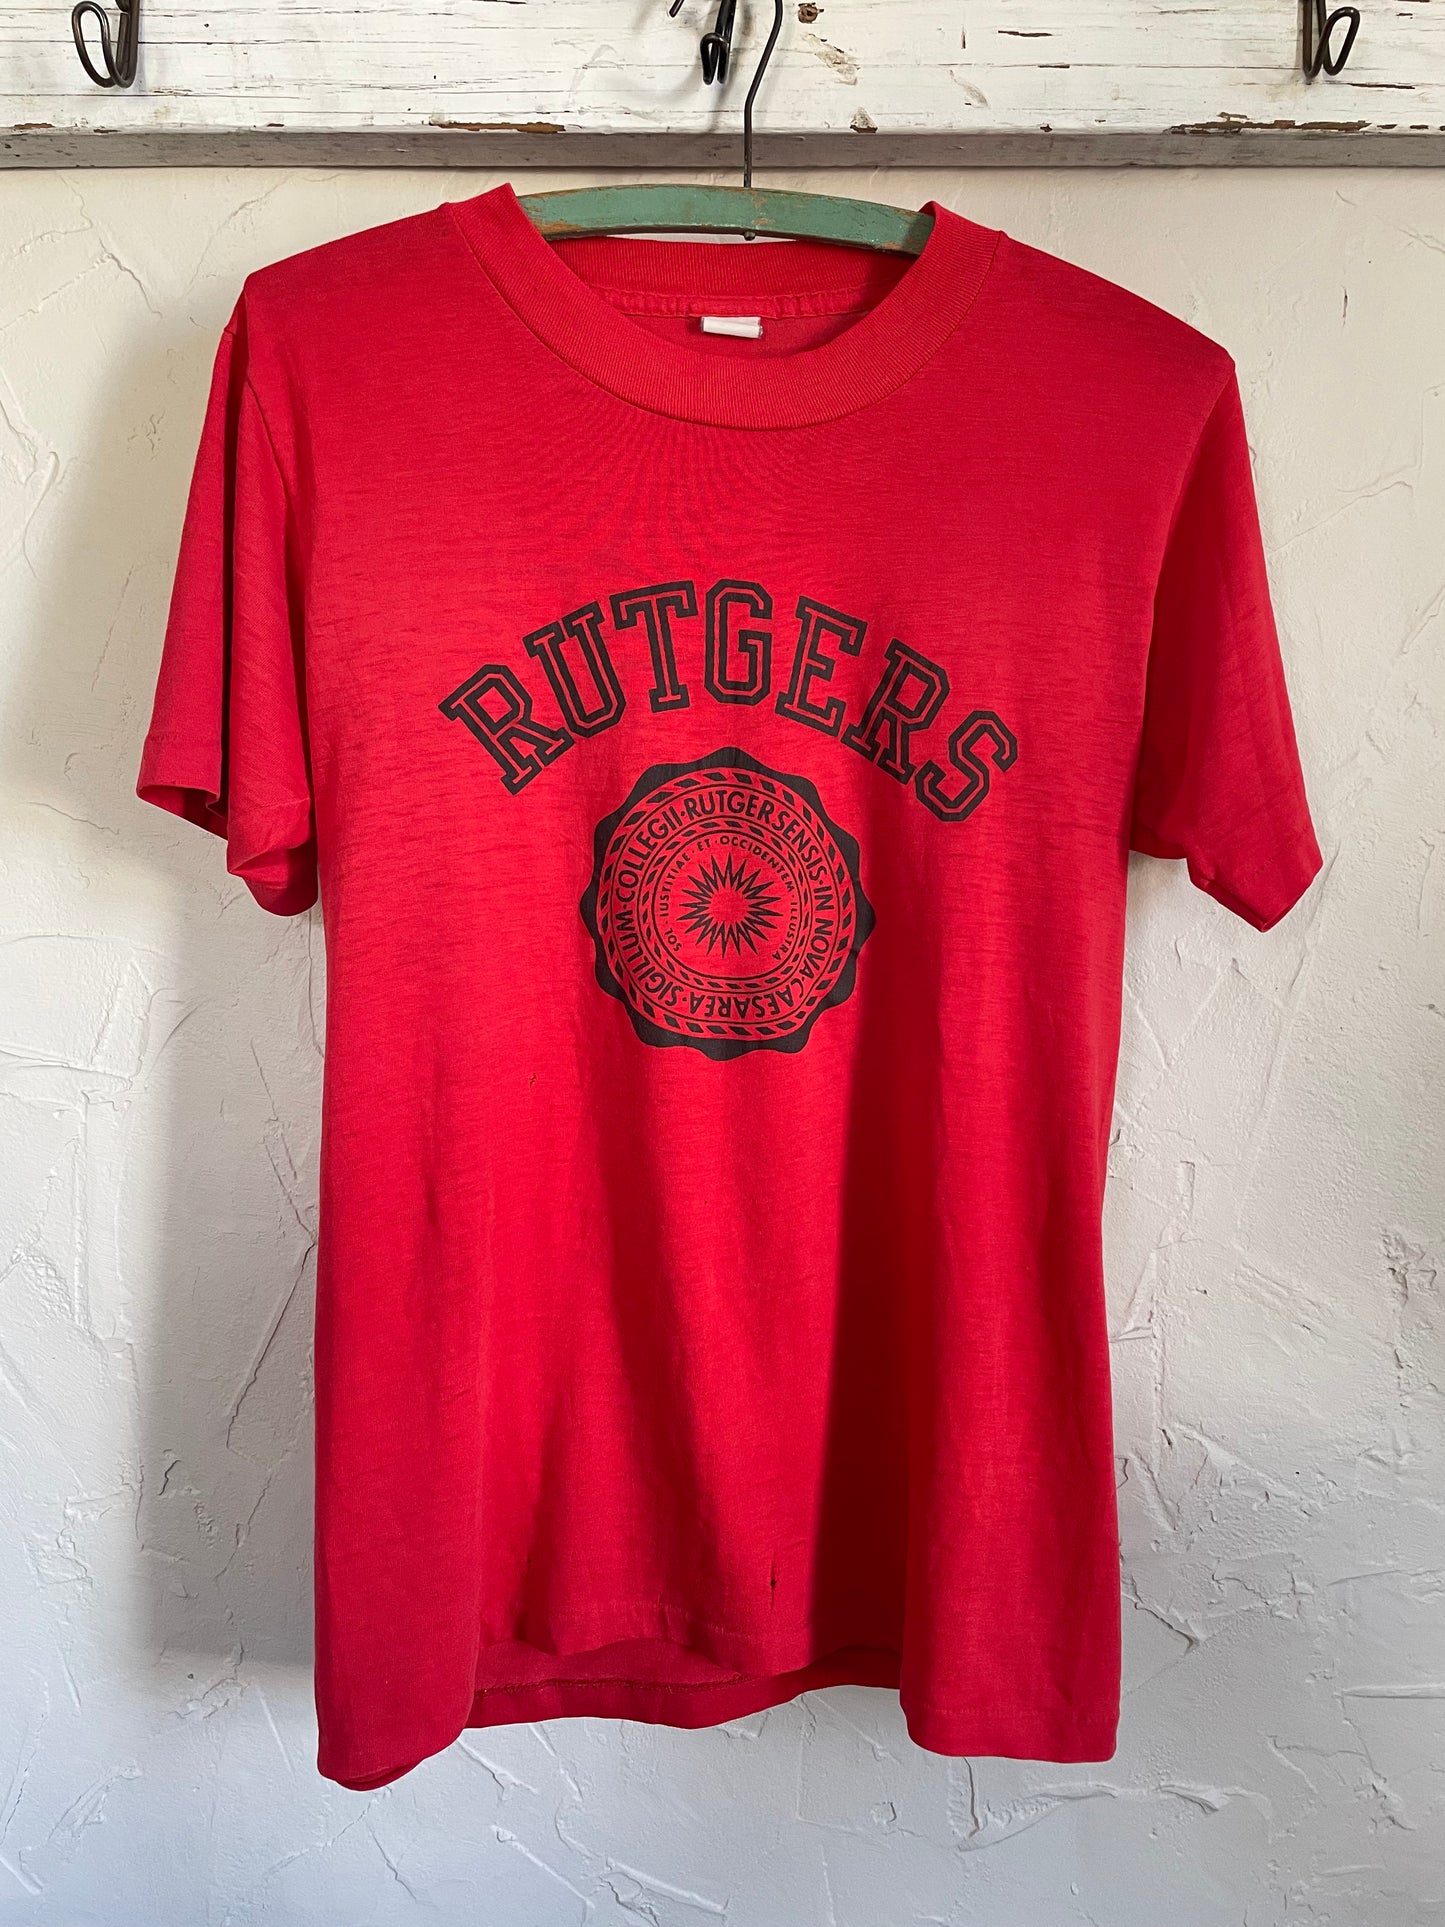 80s Rutgers Tee